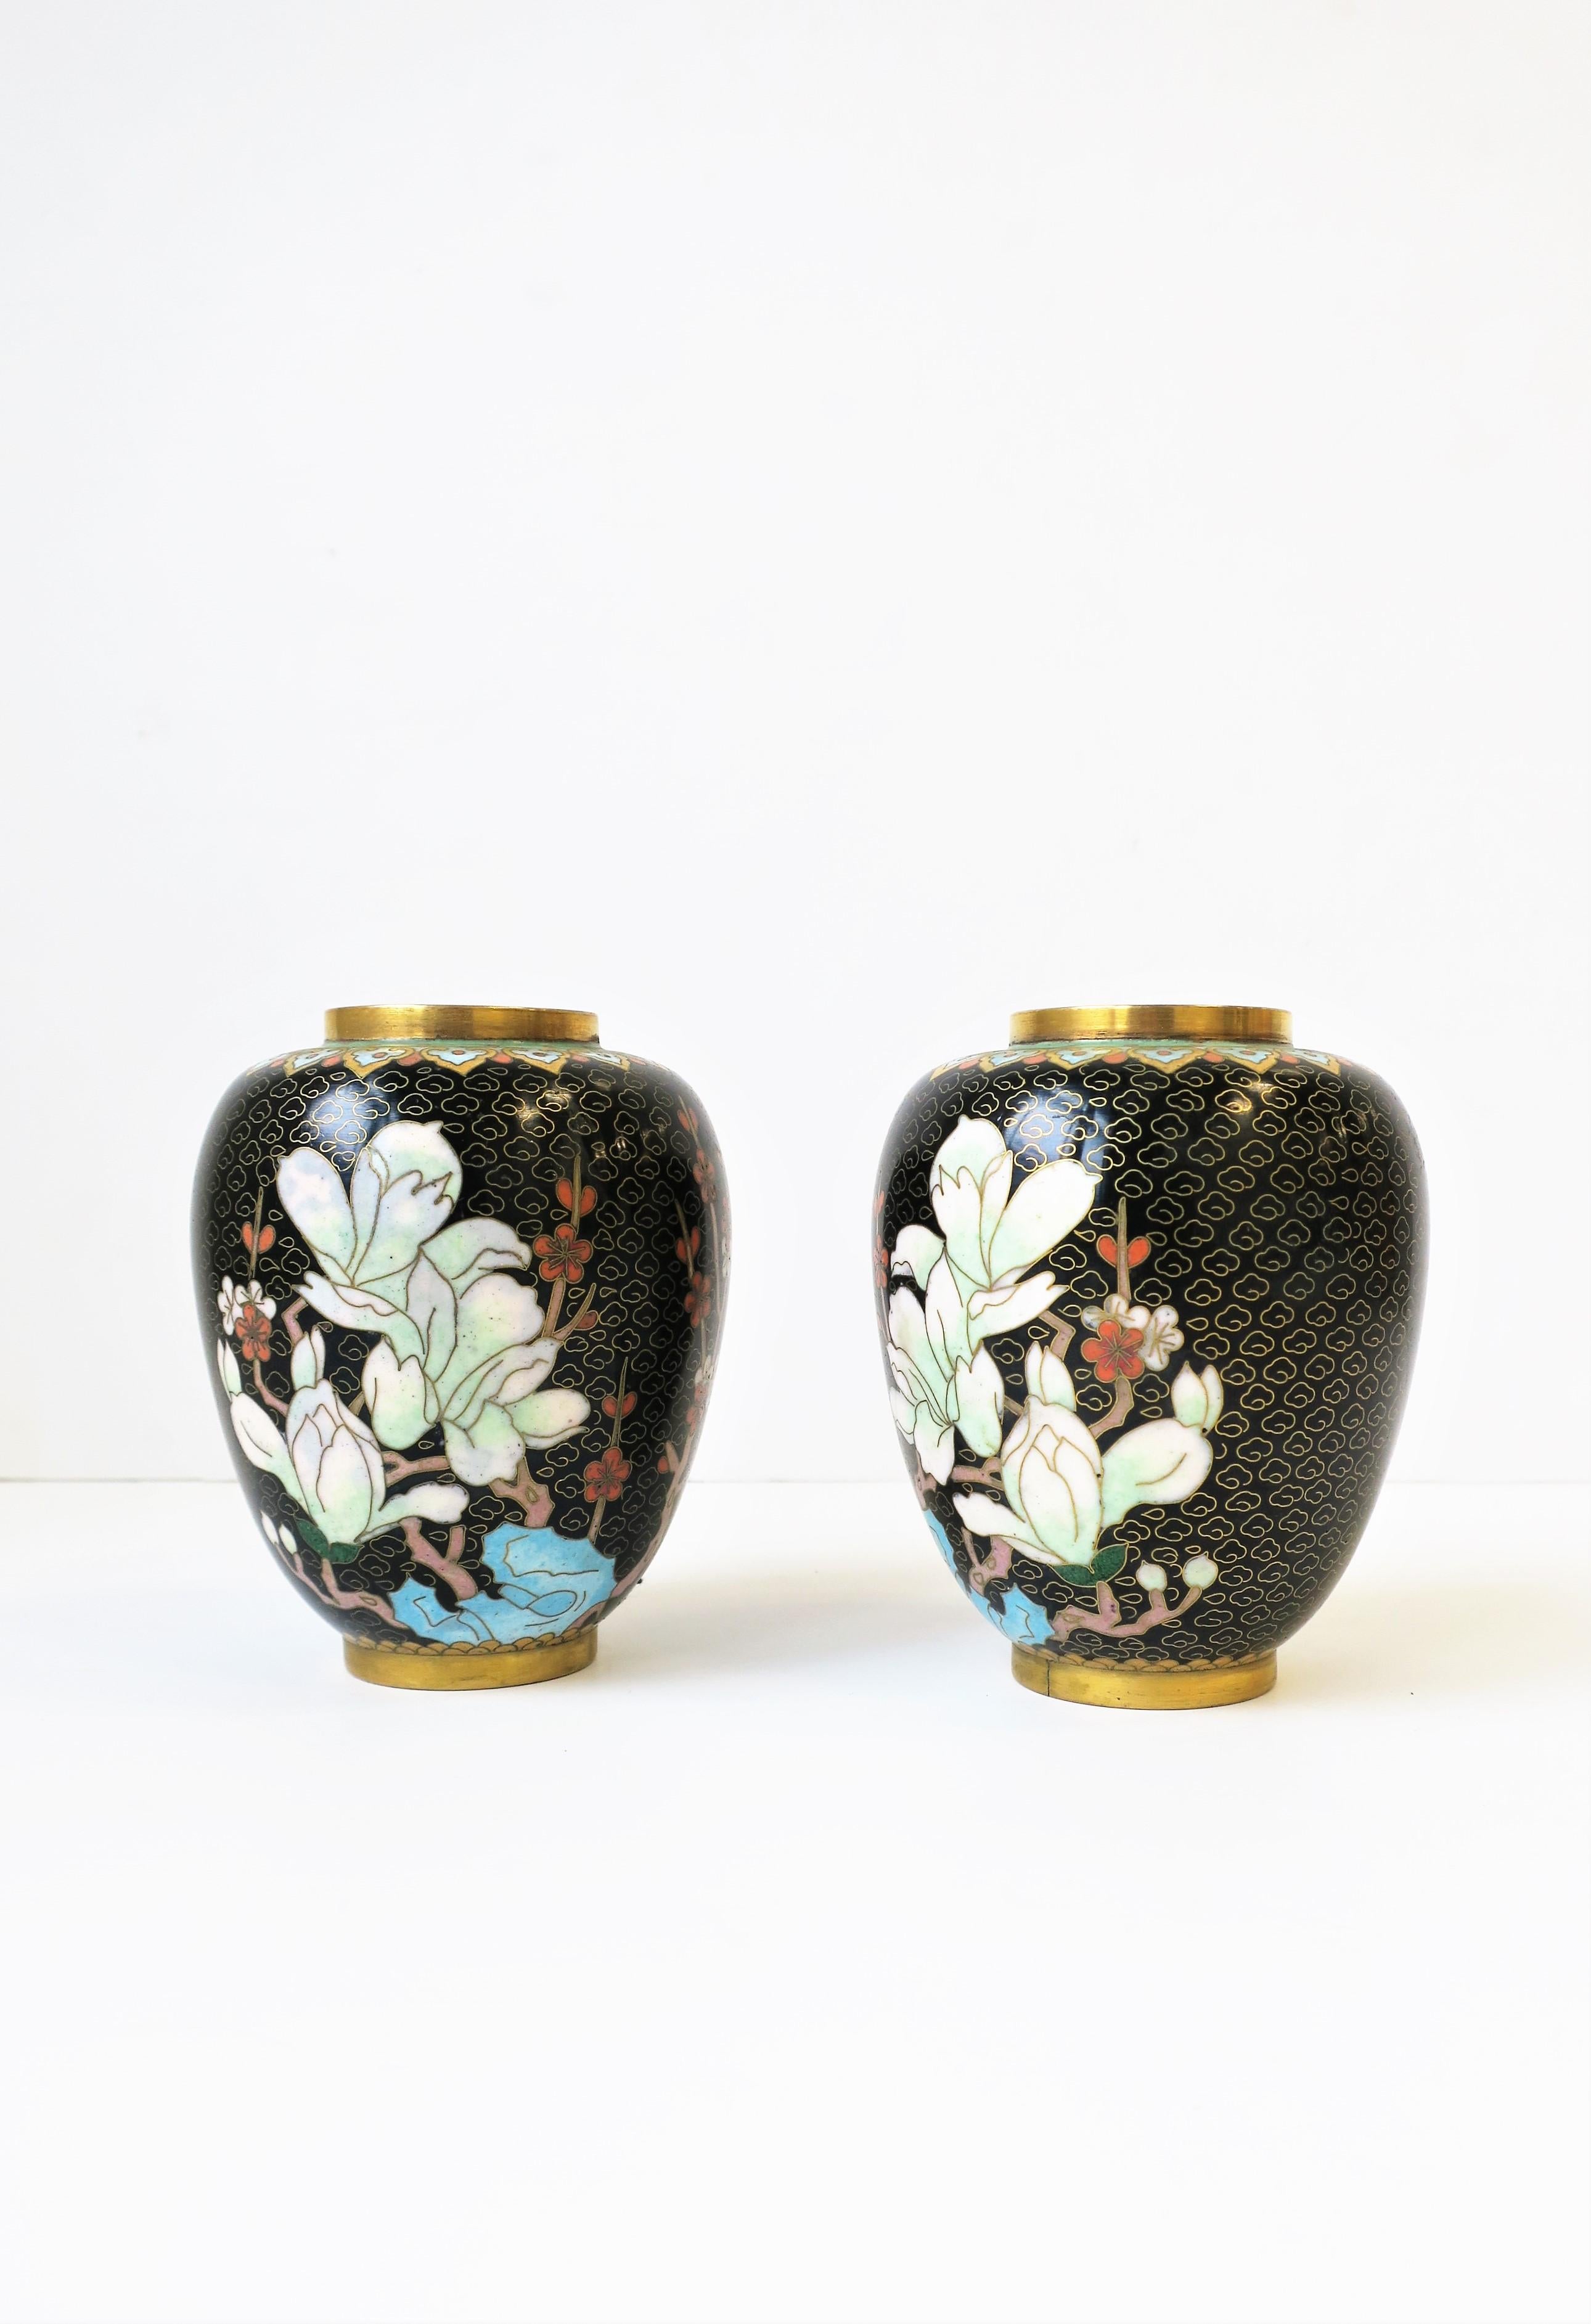 Cloisonné́ Enamel and Brass Flower Vases Black Gold and Pastel Colors, Pair For Sale 2